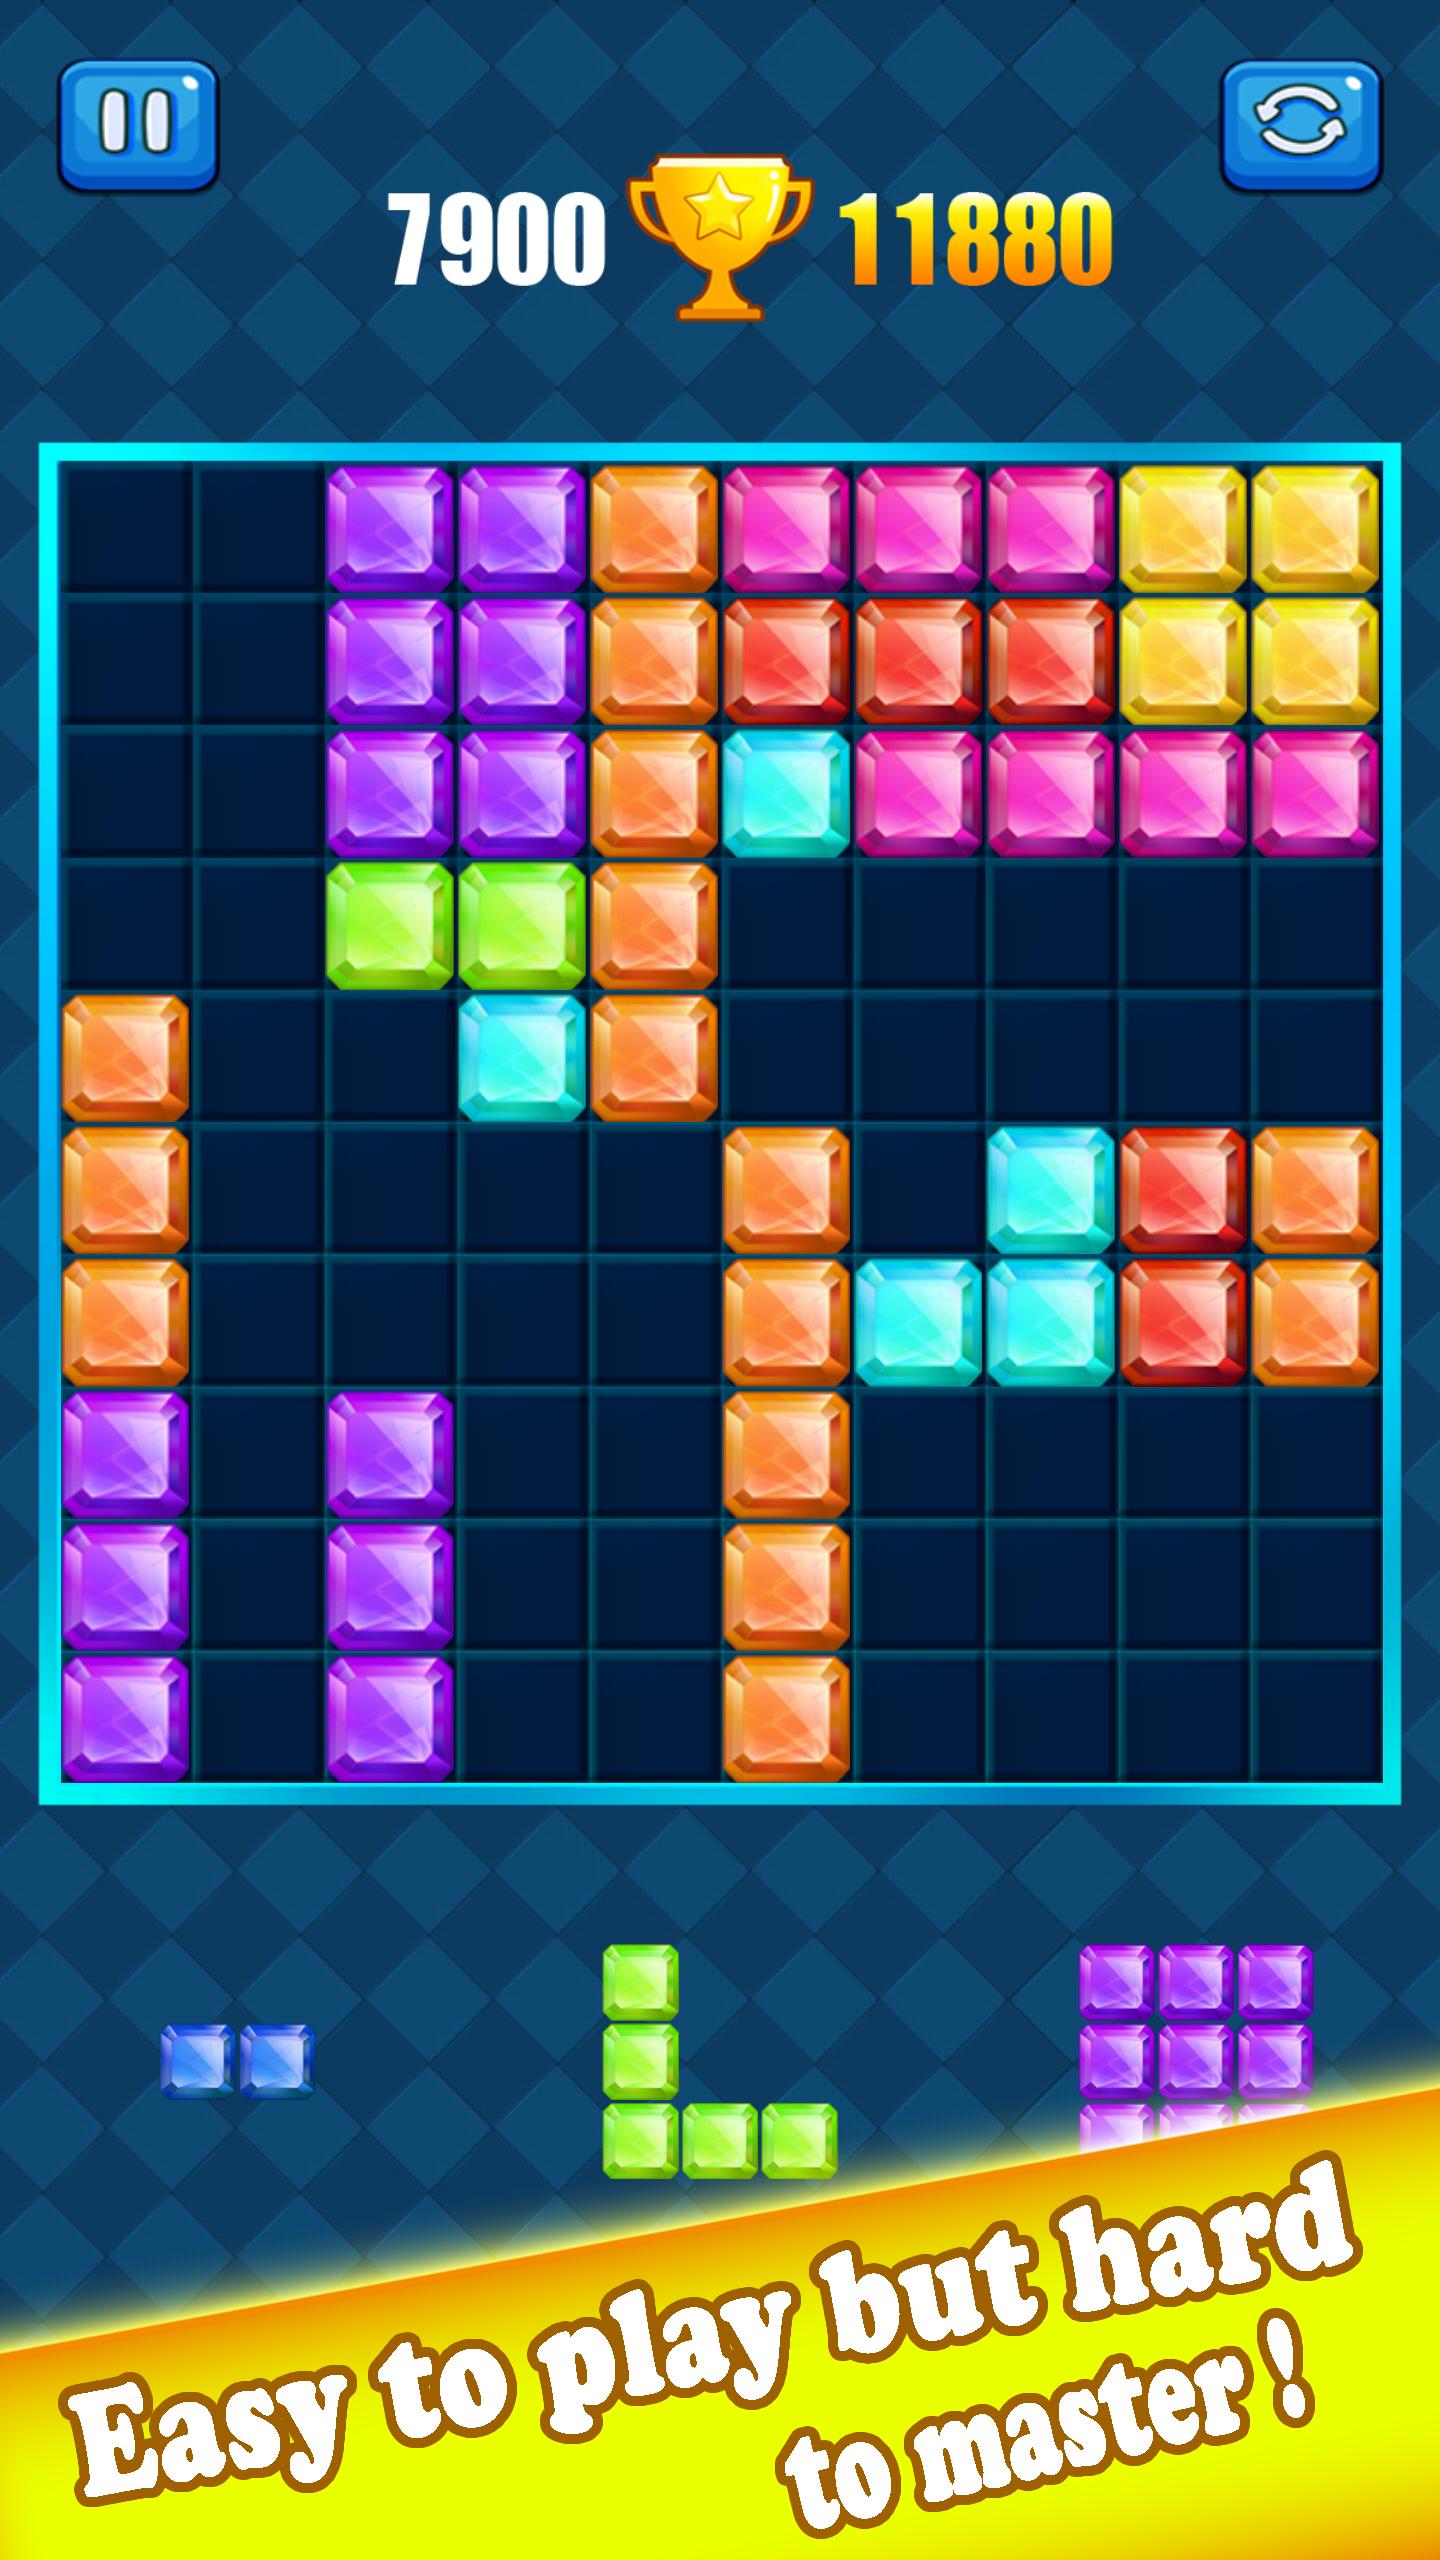 Juega al juego gratis Block Puzzle Jewel for Android - APK Download